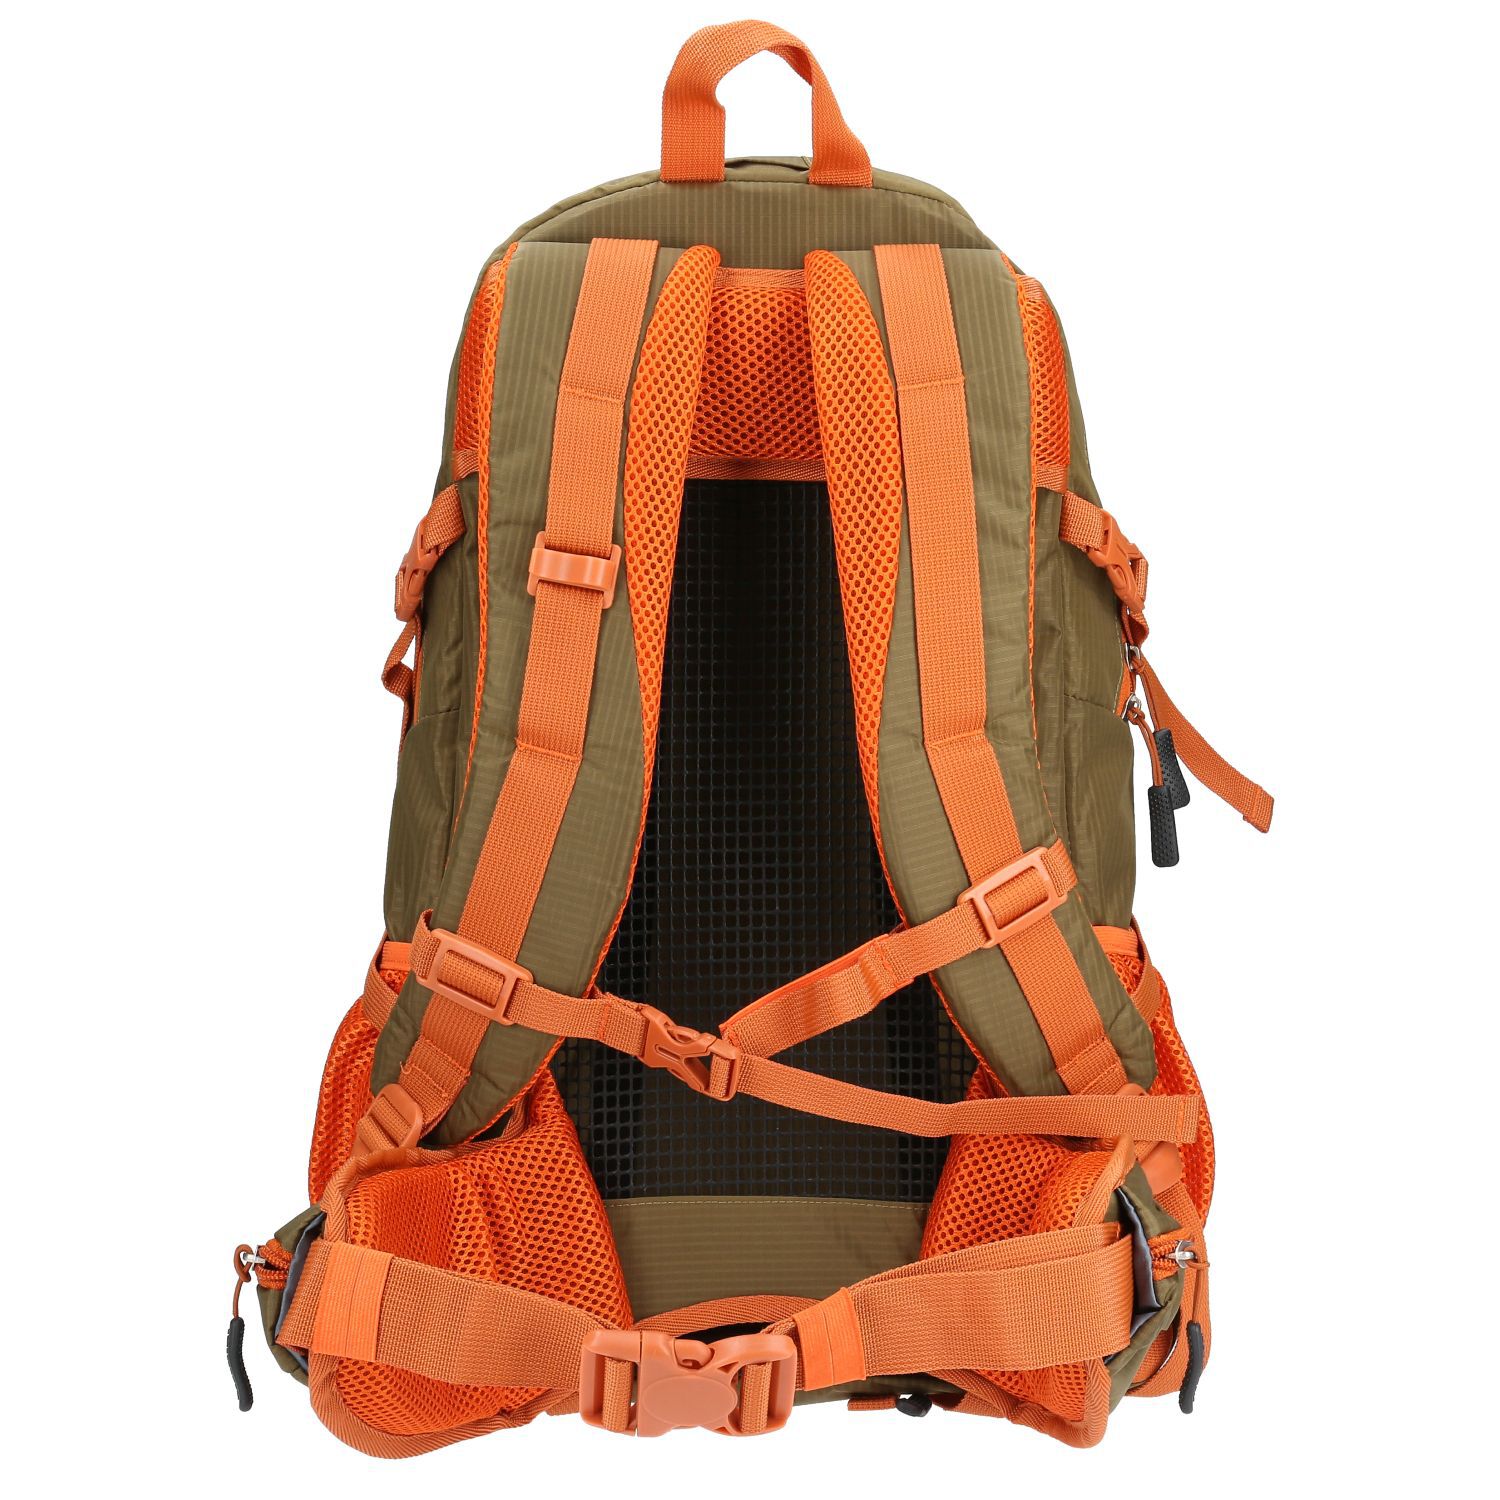 Mochila Unisex 35l Backpack-Merrell Chile